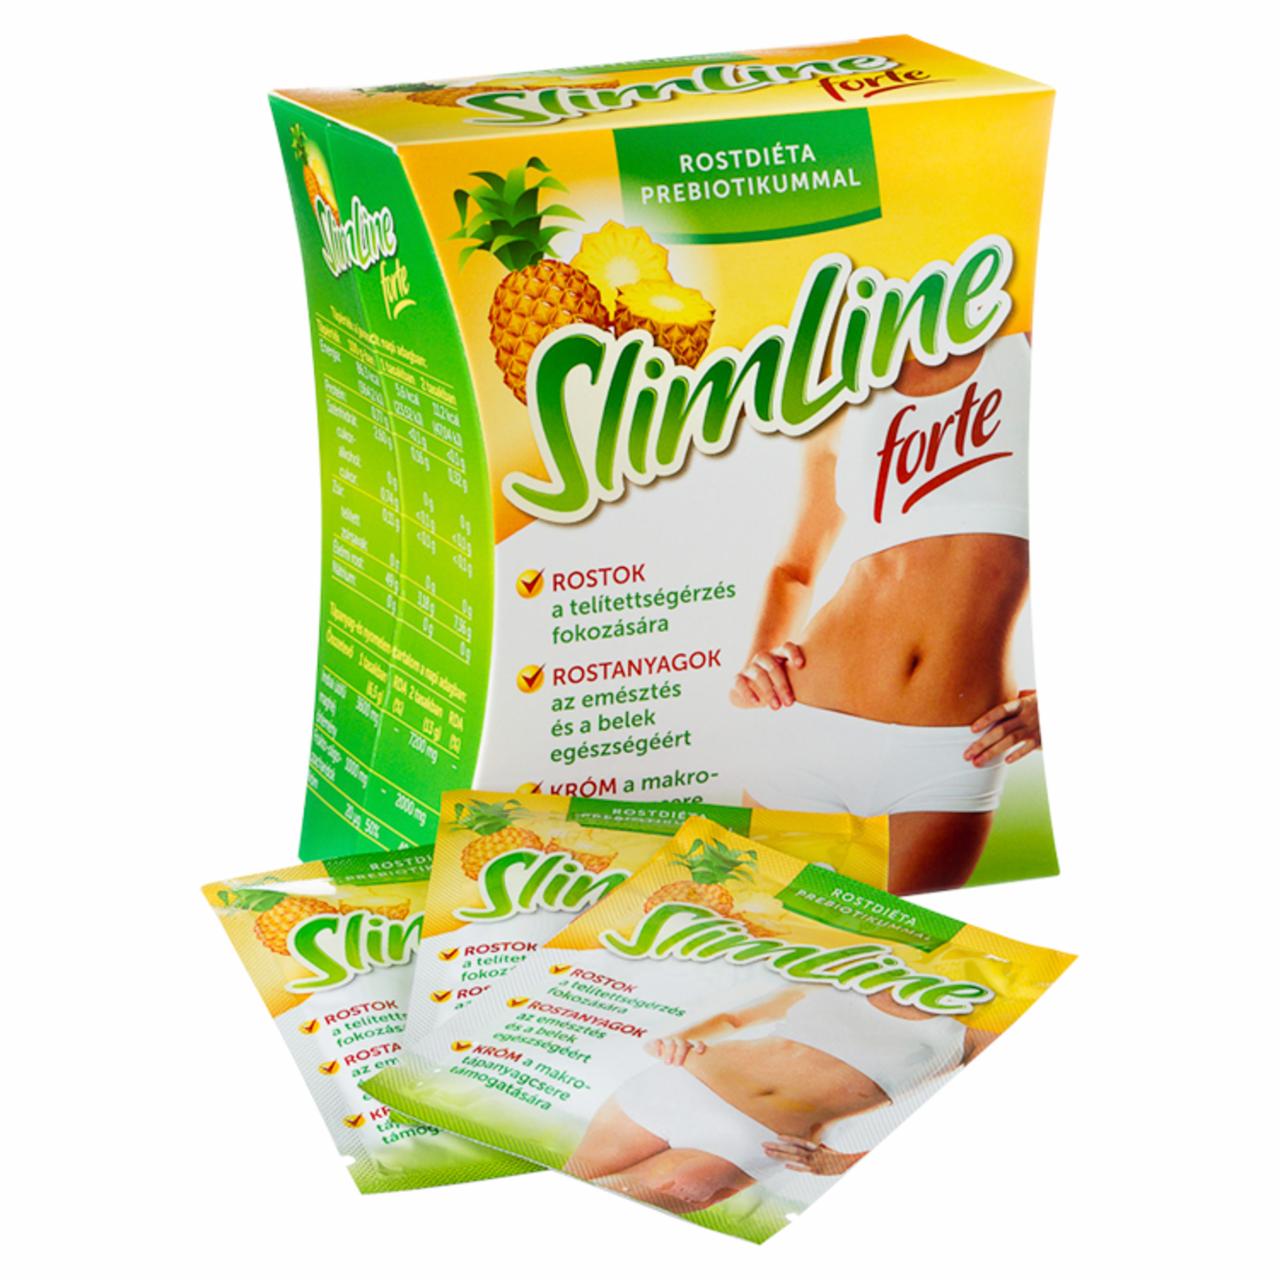 Képek - Slimline Rostdiéta Forte prebiotikummal étrend-kiegészítő rostanyag őrlemény 20 db 130 g